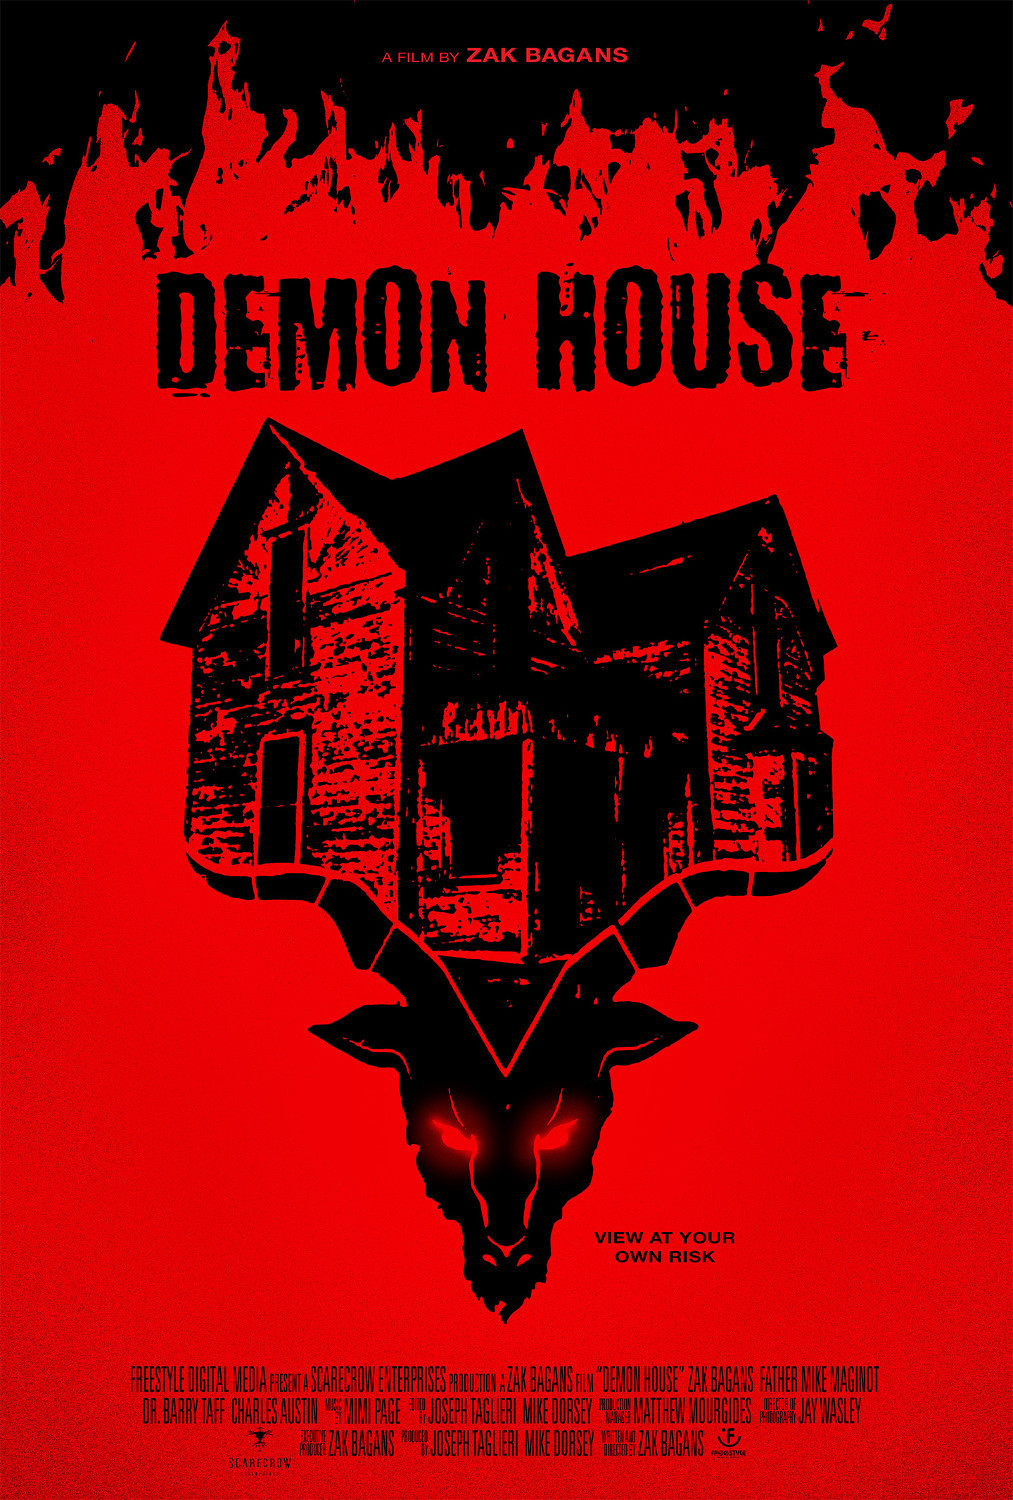 Nonton film Demon House layarkaca21 indoxx1 ganool online streaming terbaru